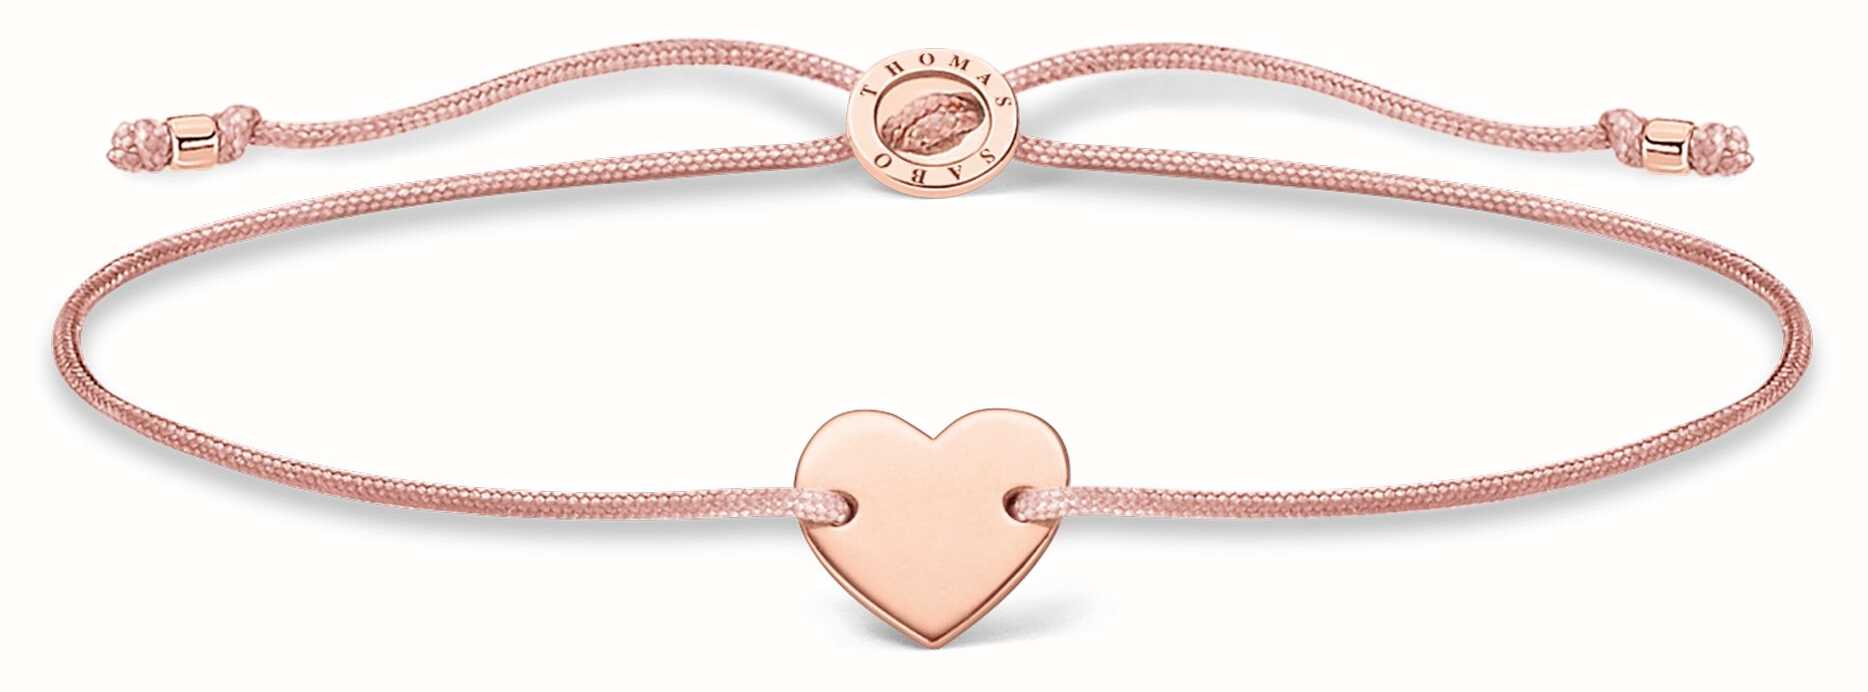 Thomas Sabo Pink Nylon Rose Gold Plated Heart Bracelet A1996-597-19 ...